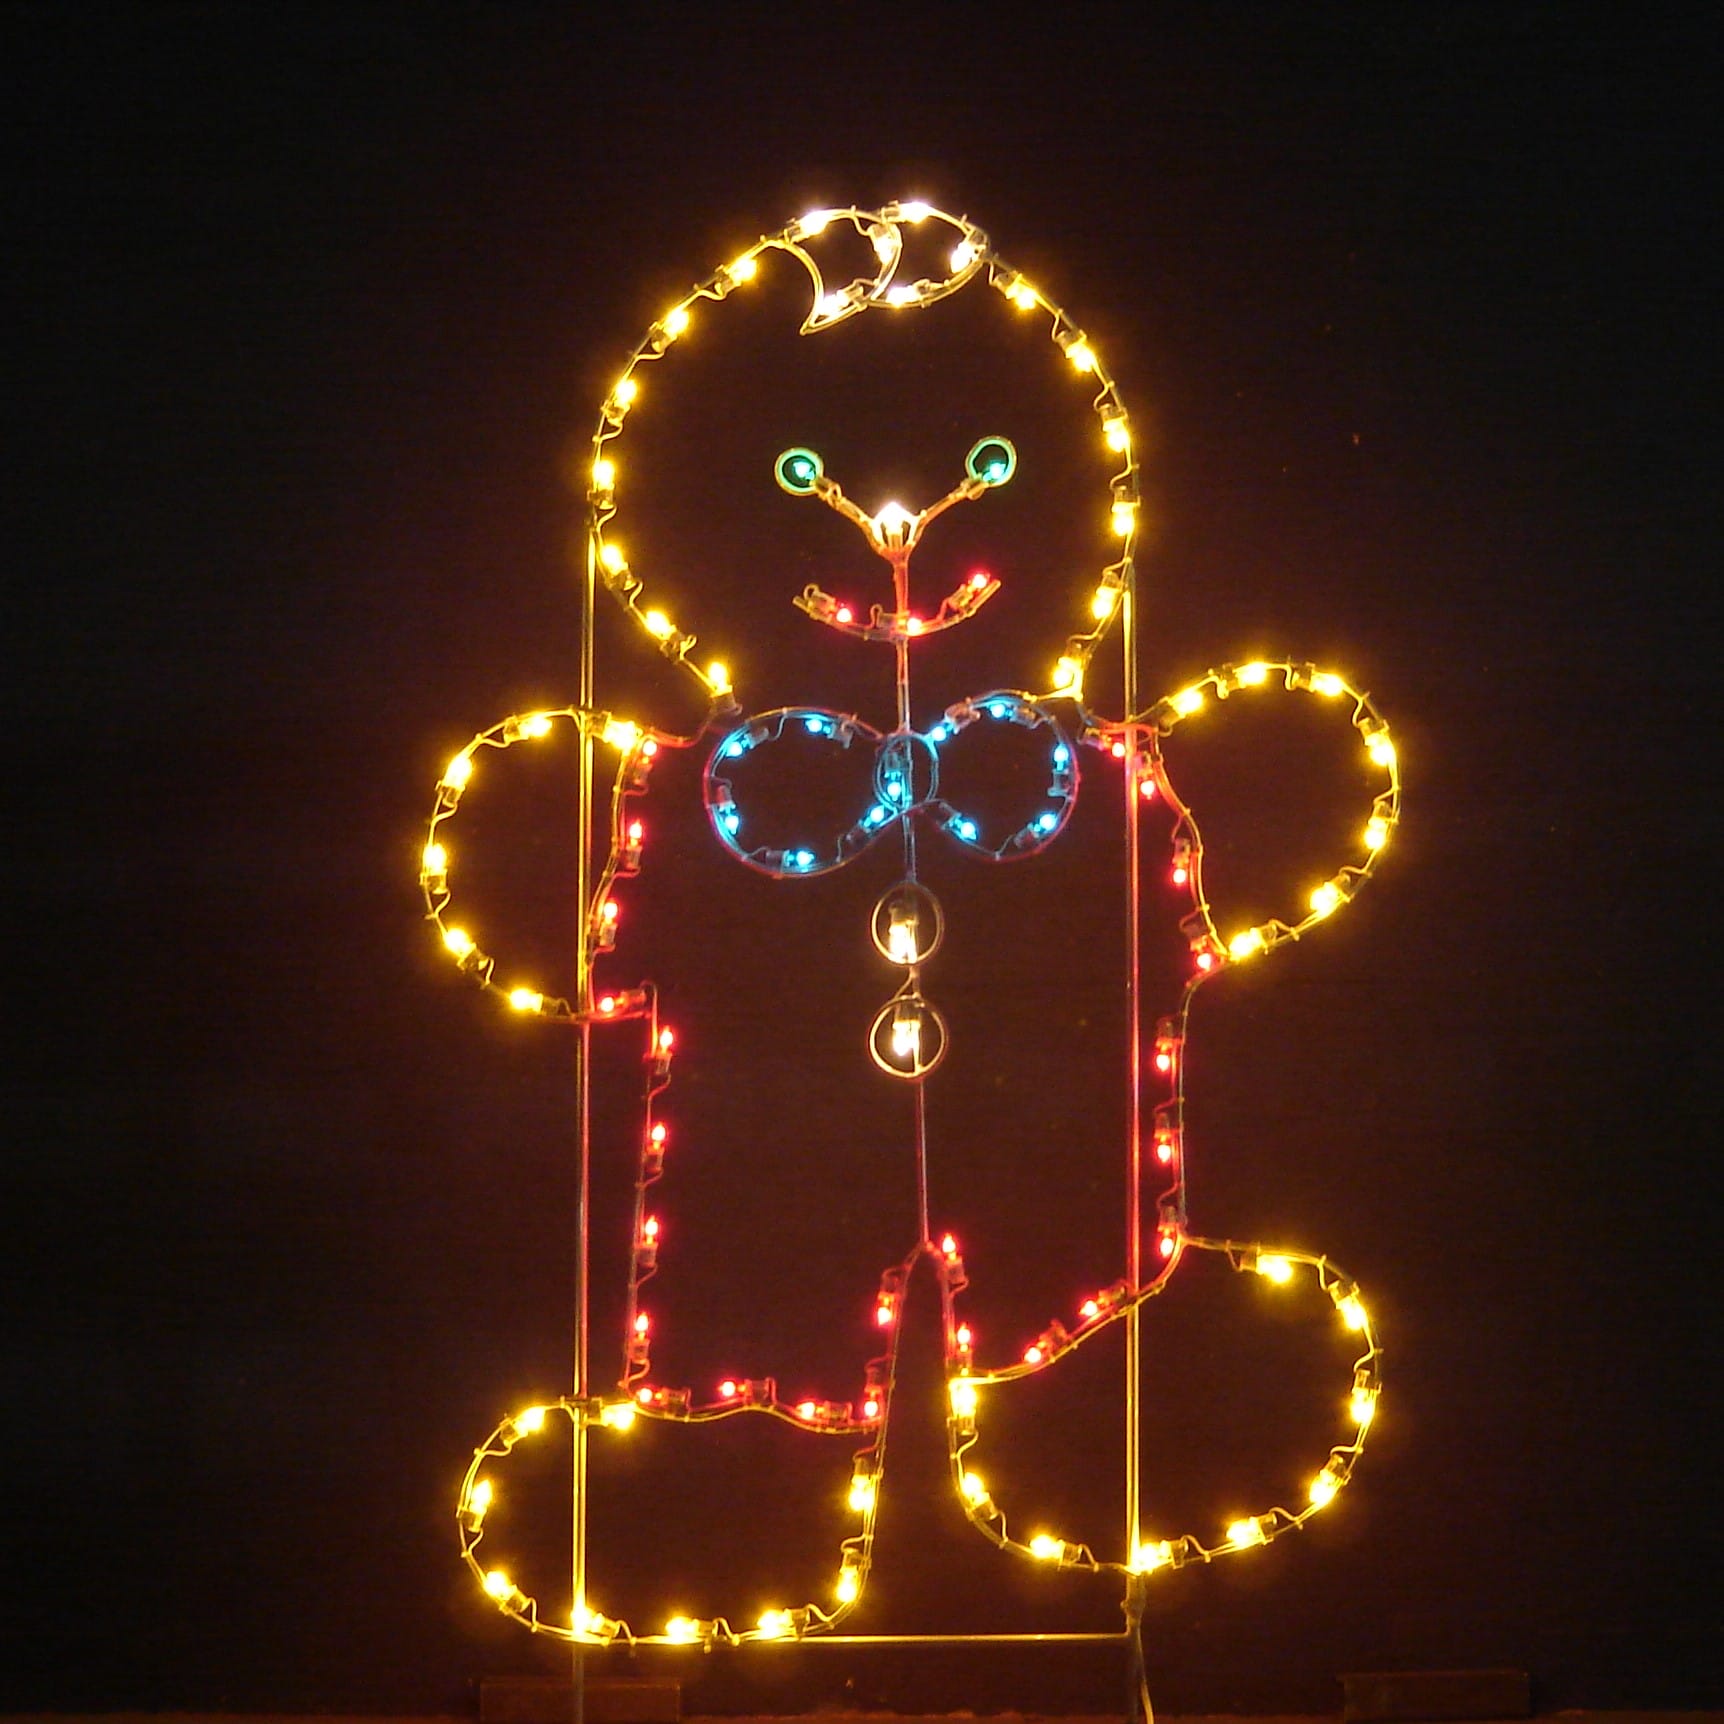 6' Gingerbread Boy Holiday Light Display - Creative Displays